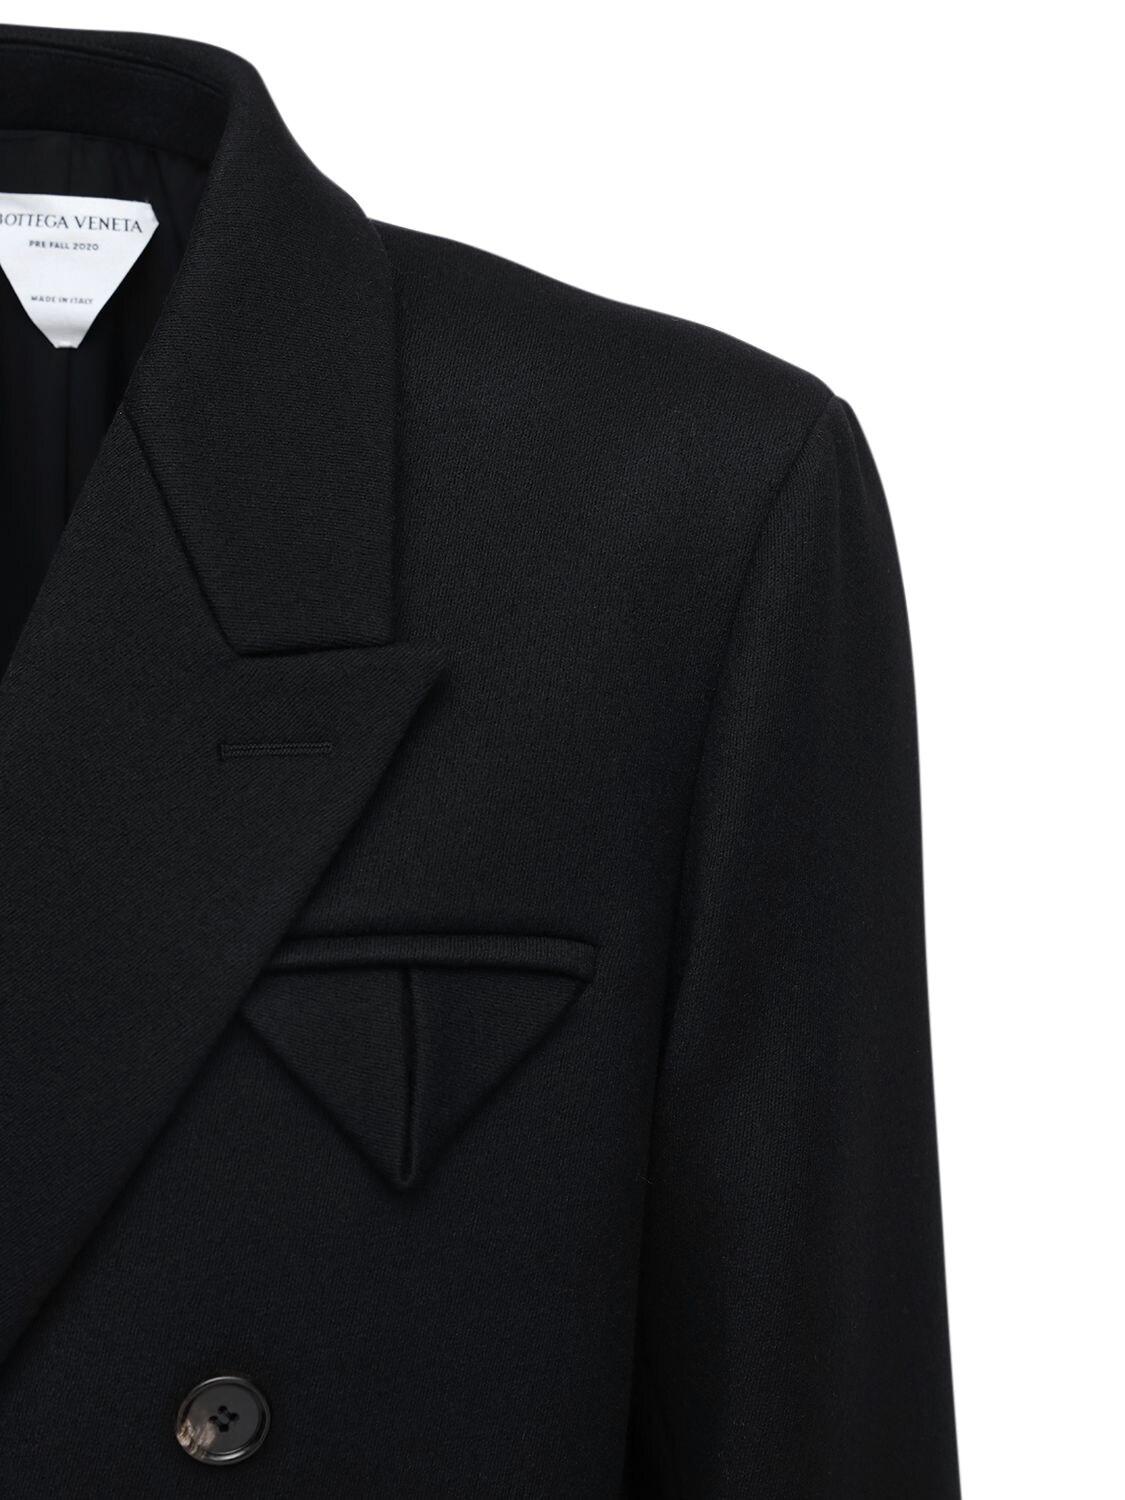 Bottega Veneta Compact Wool Cavalry Twill Coat in Black for Men